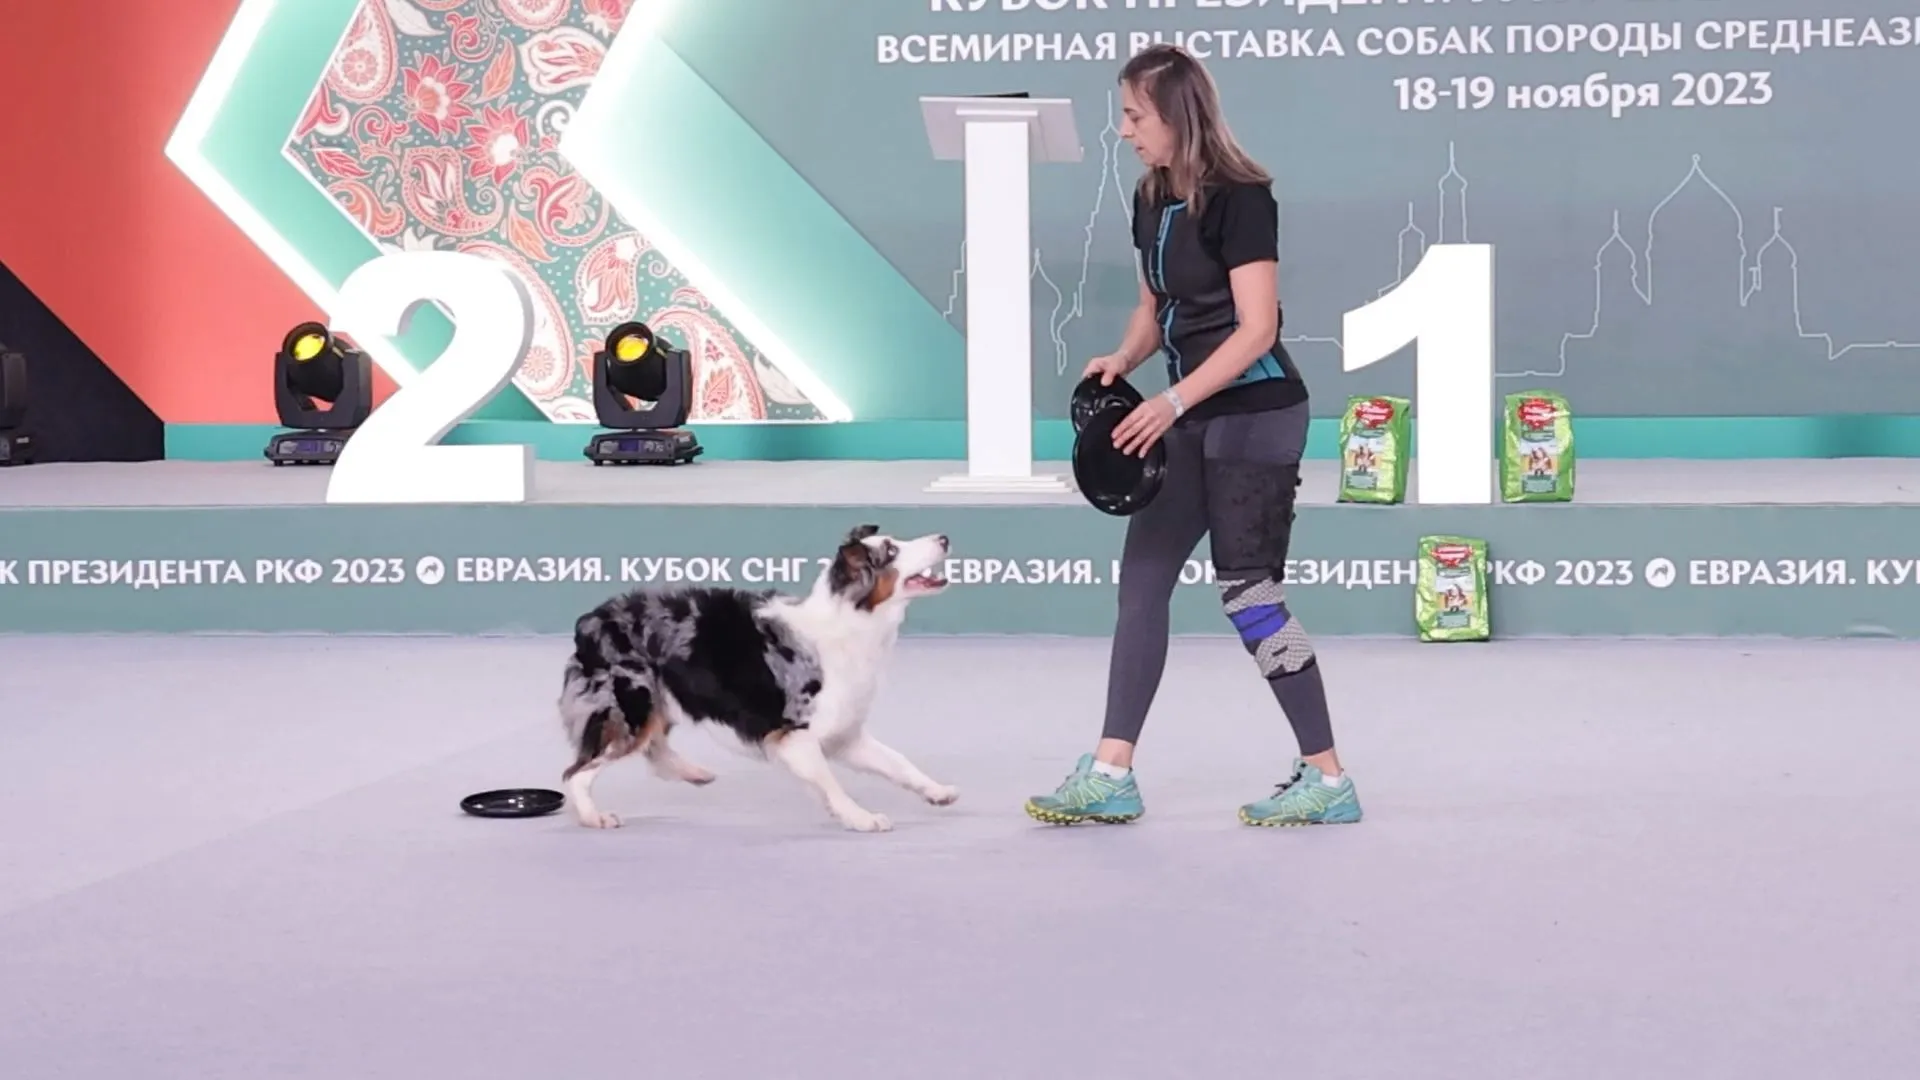 Topprestaties op vier poten: De Eurasia Dog Show 2023 in Krasnogorsk